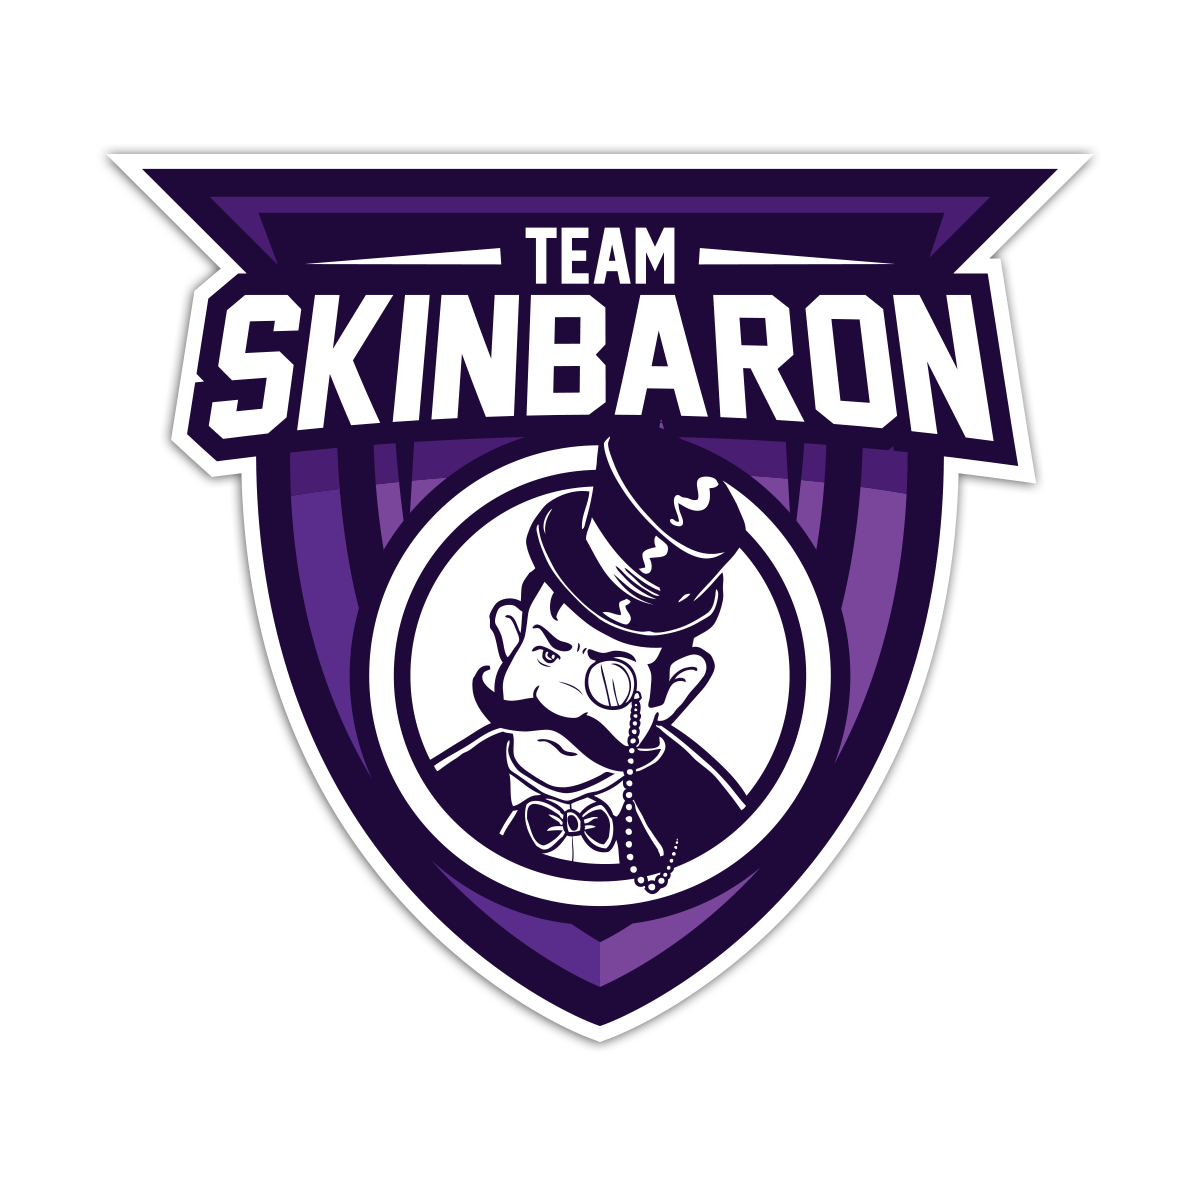 Team SkinBaron